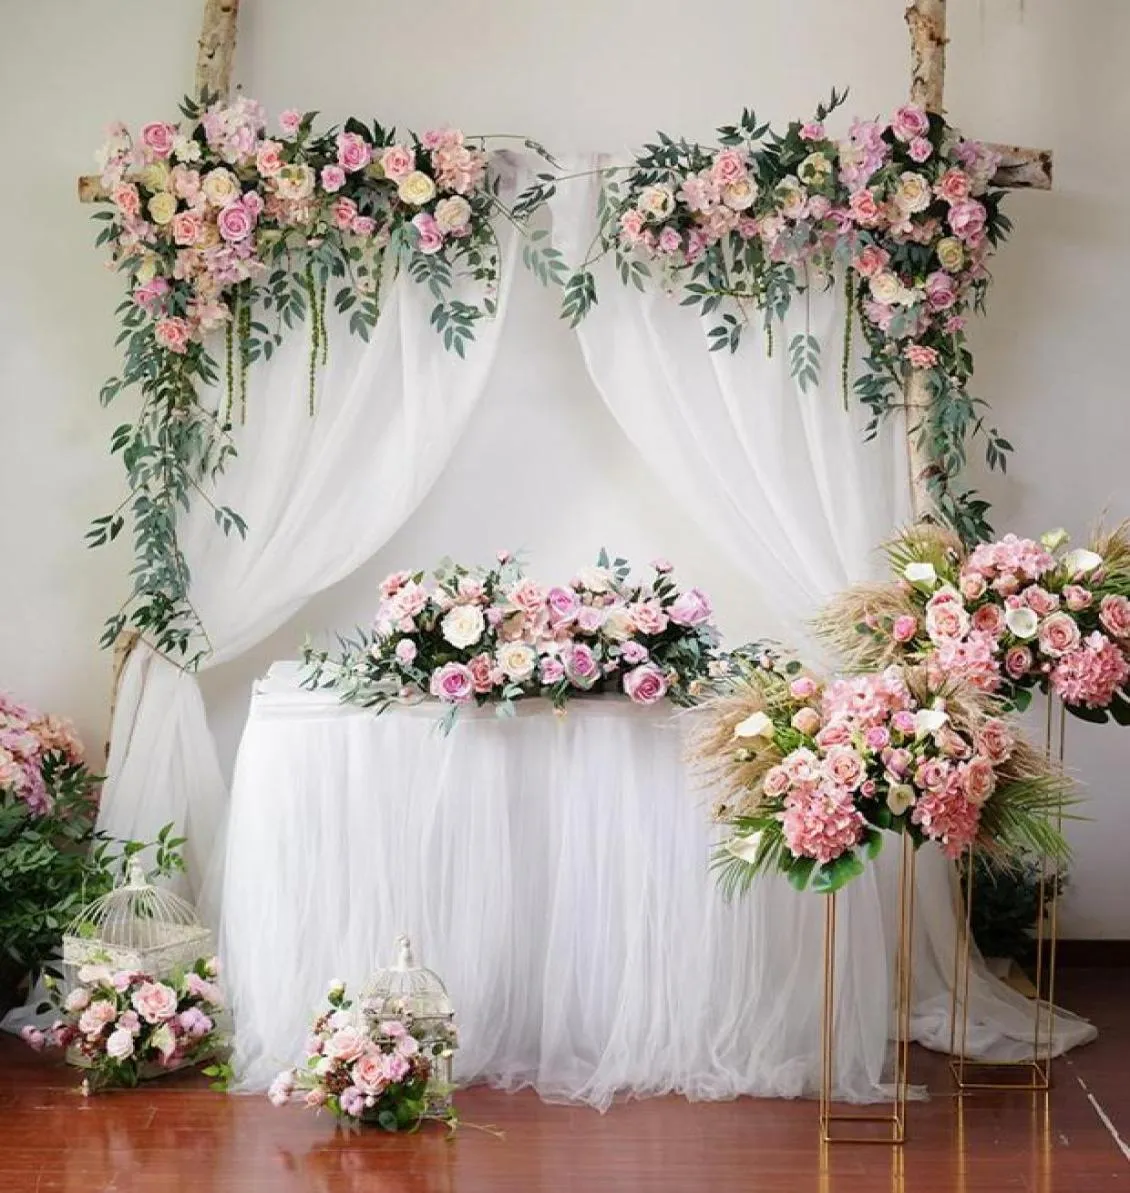 Decorative Flowers Wreaths Wedding Pink Floral Arch Window Triangle Flower Row Wall El Stage Prefunction Area Background Decora5636458